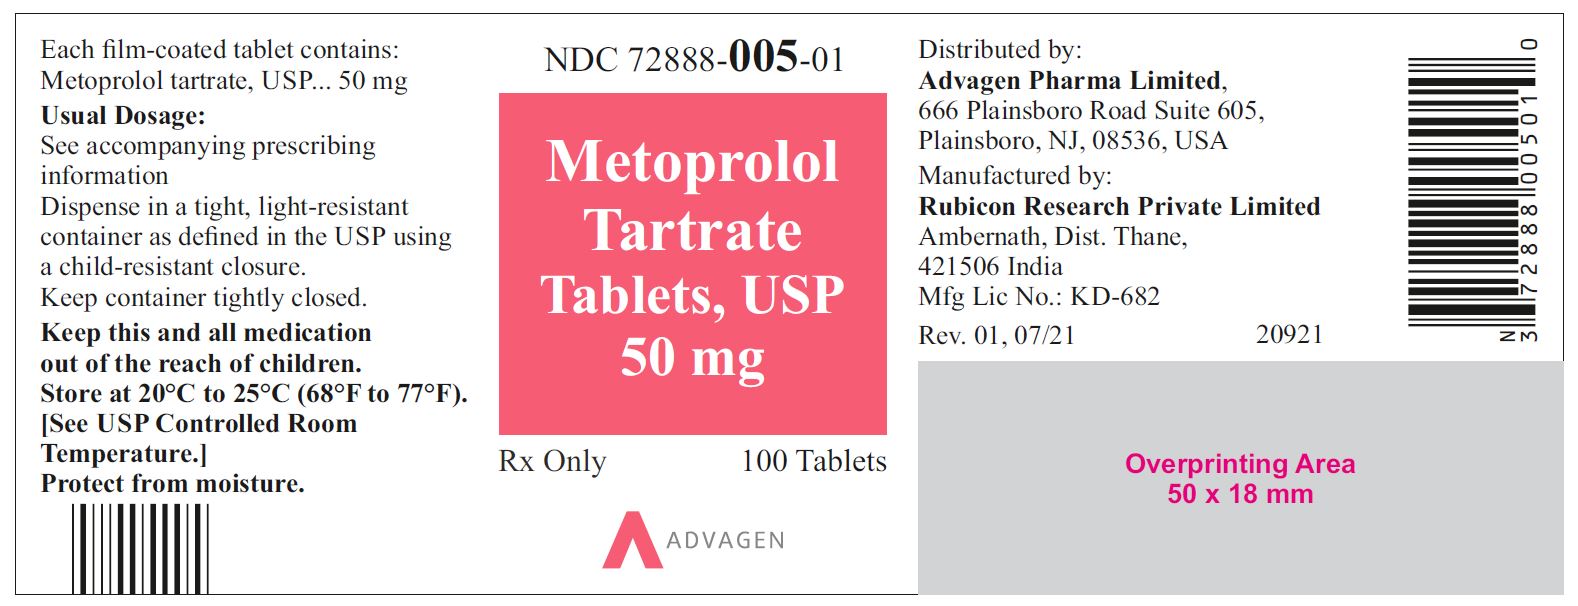 NDC: <a href=/NDC/72888-005-01>72888-005-01</a> - Metoprolol Tartrate Tablets, USP 50 mg - 100 Tablets